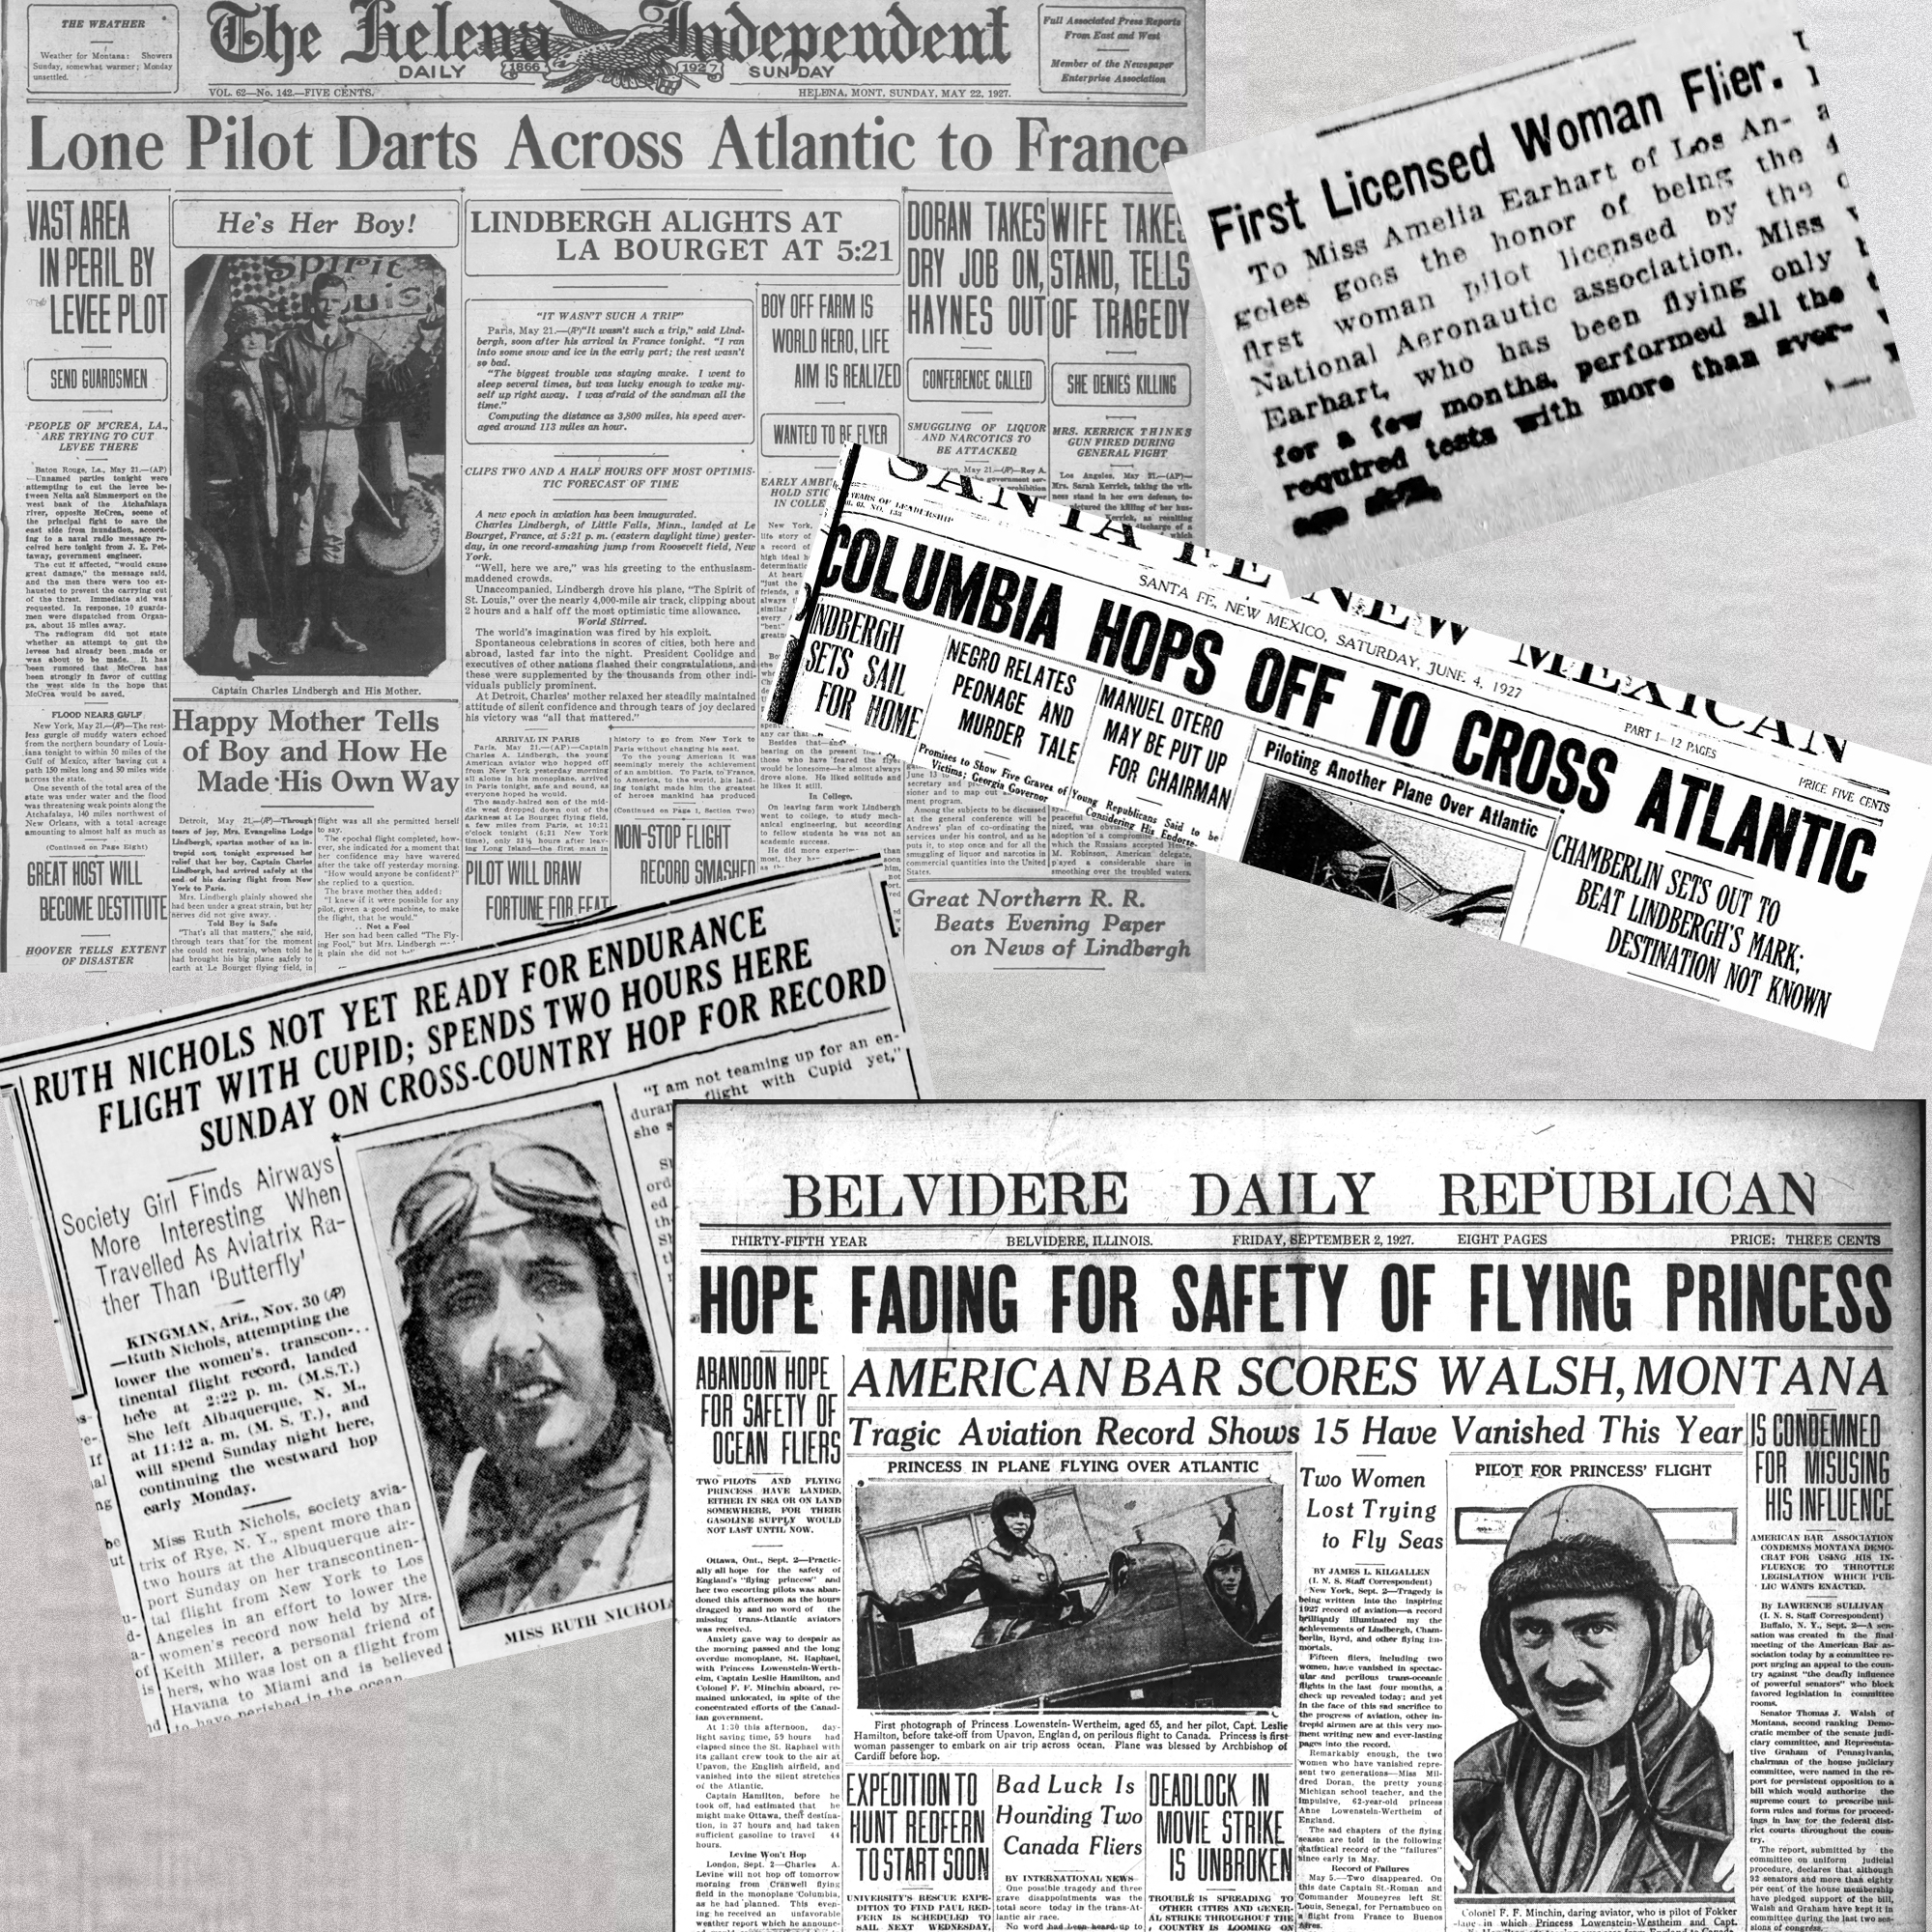 1920s era aviation headlines